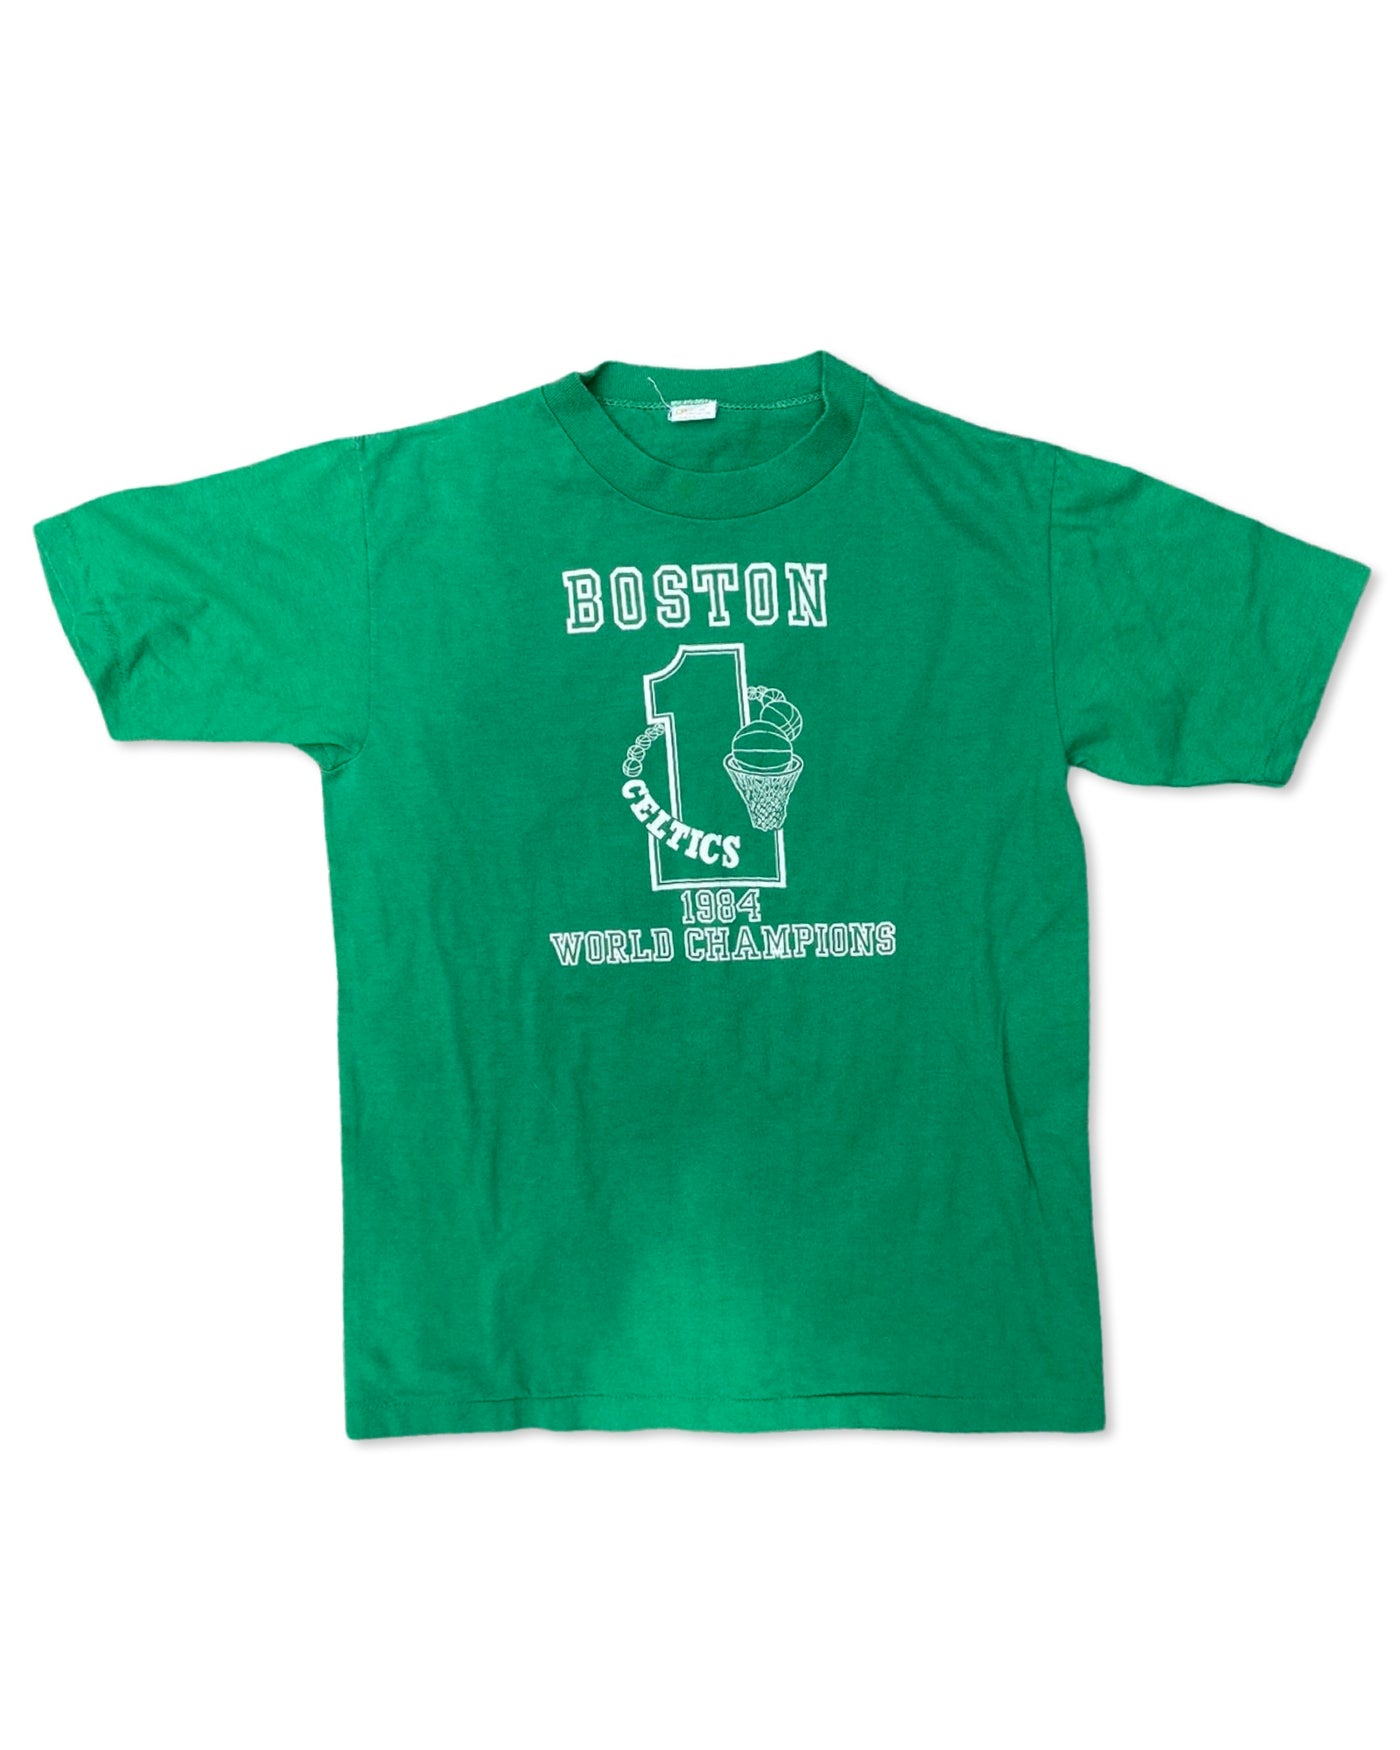 Vintage 1984 Boston Celtics World Champions T-Shirt